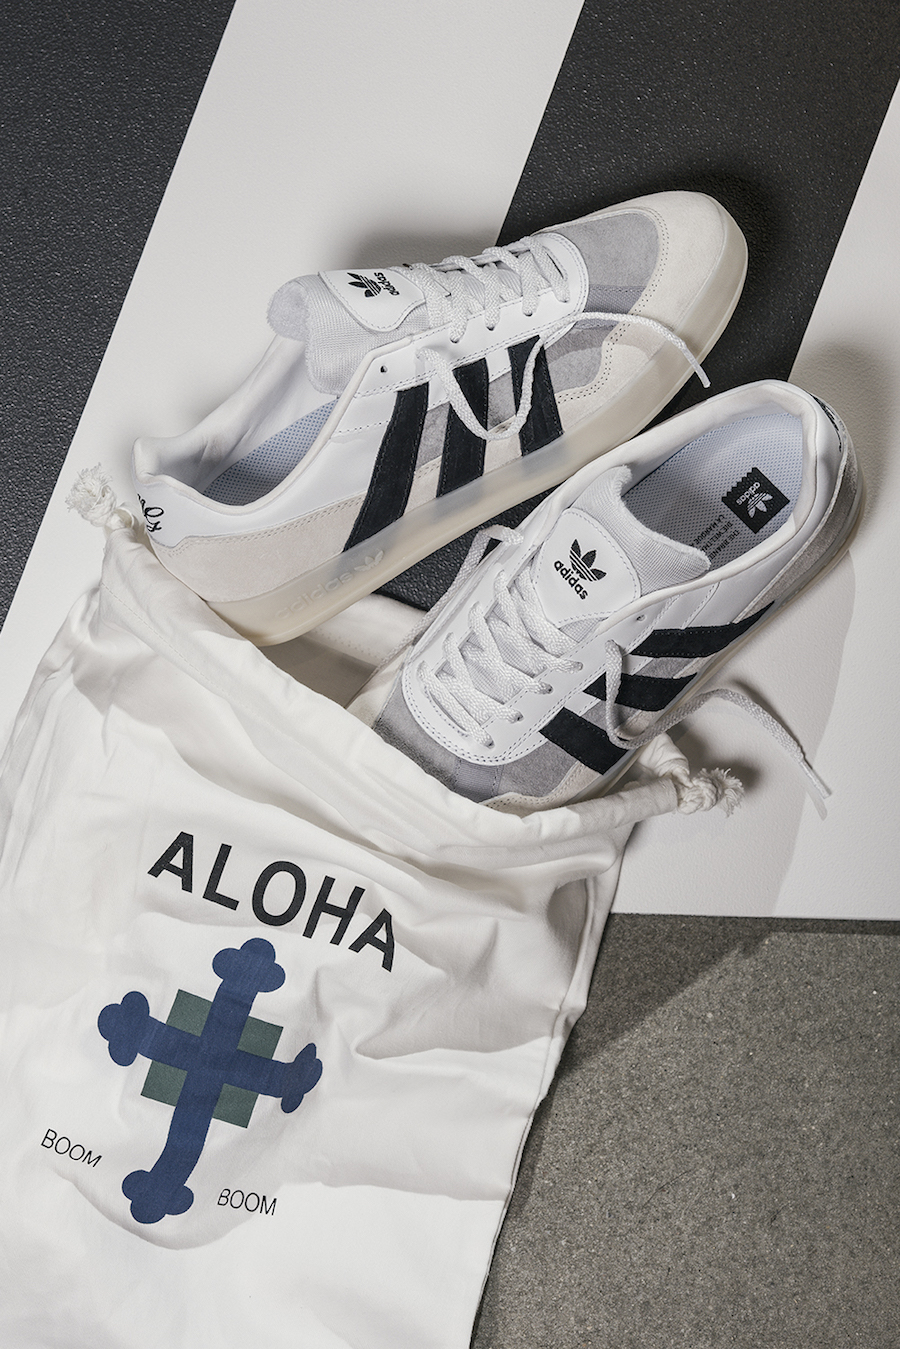 adidas Aloha Super Release Date